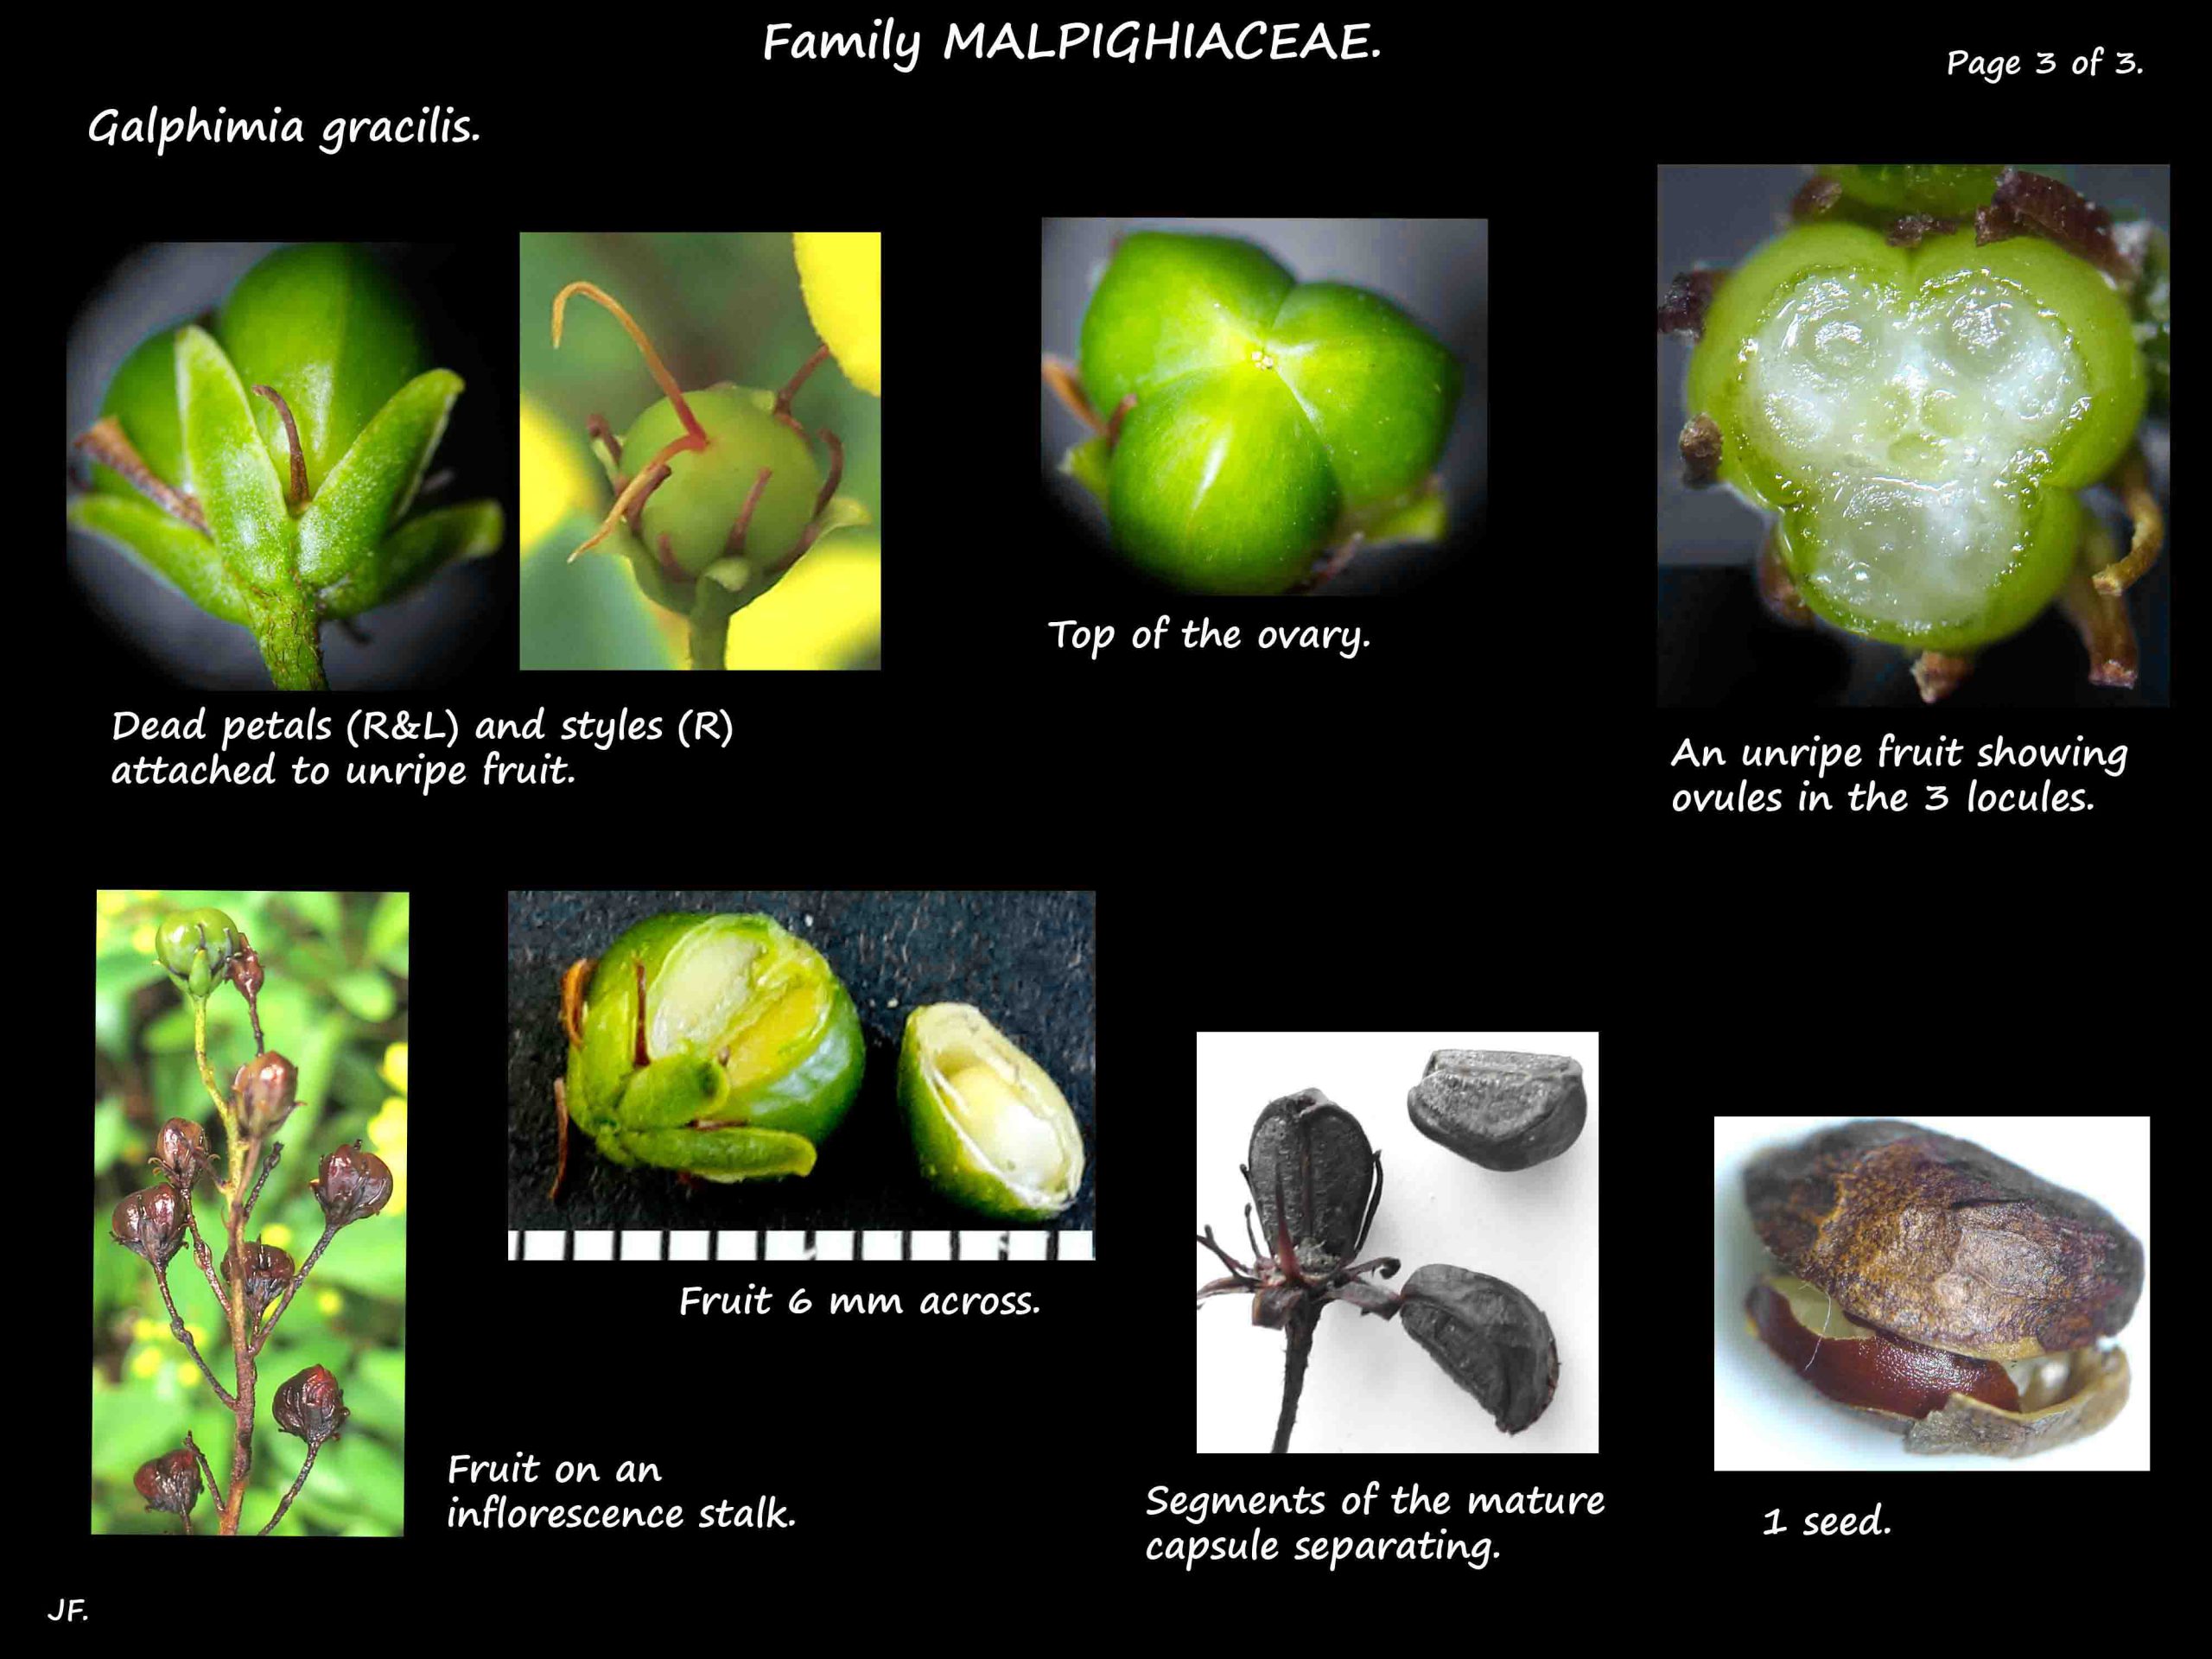 3 Fruit & seeds of Galphimia gracilis